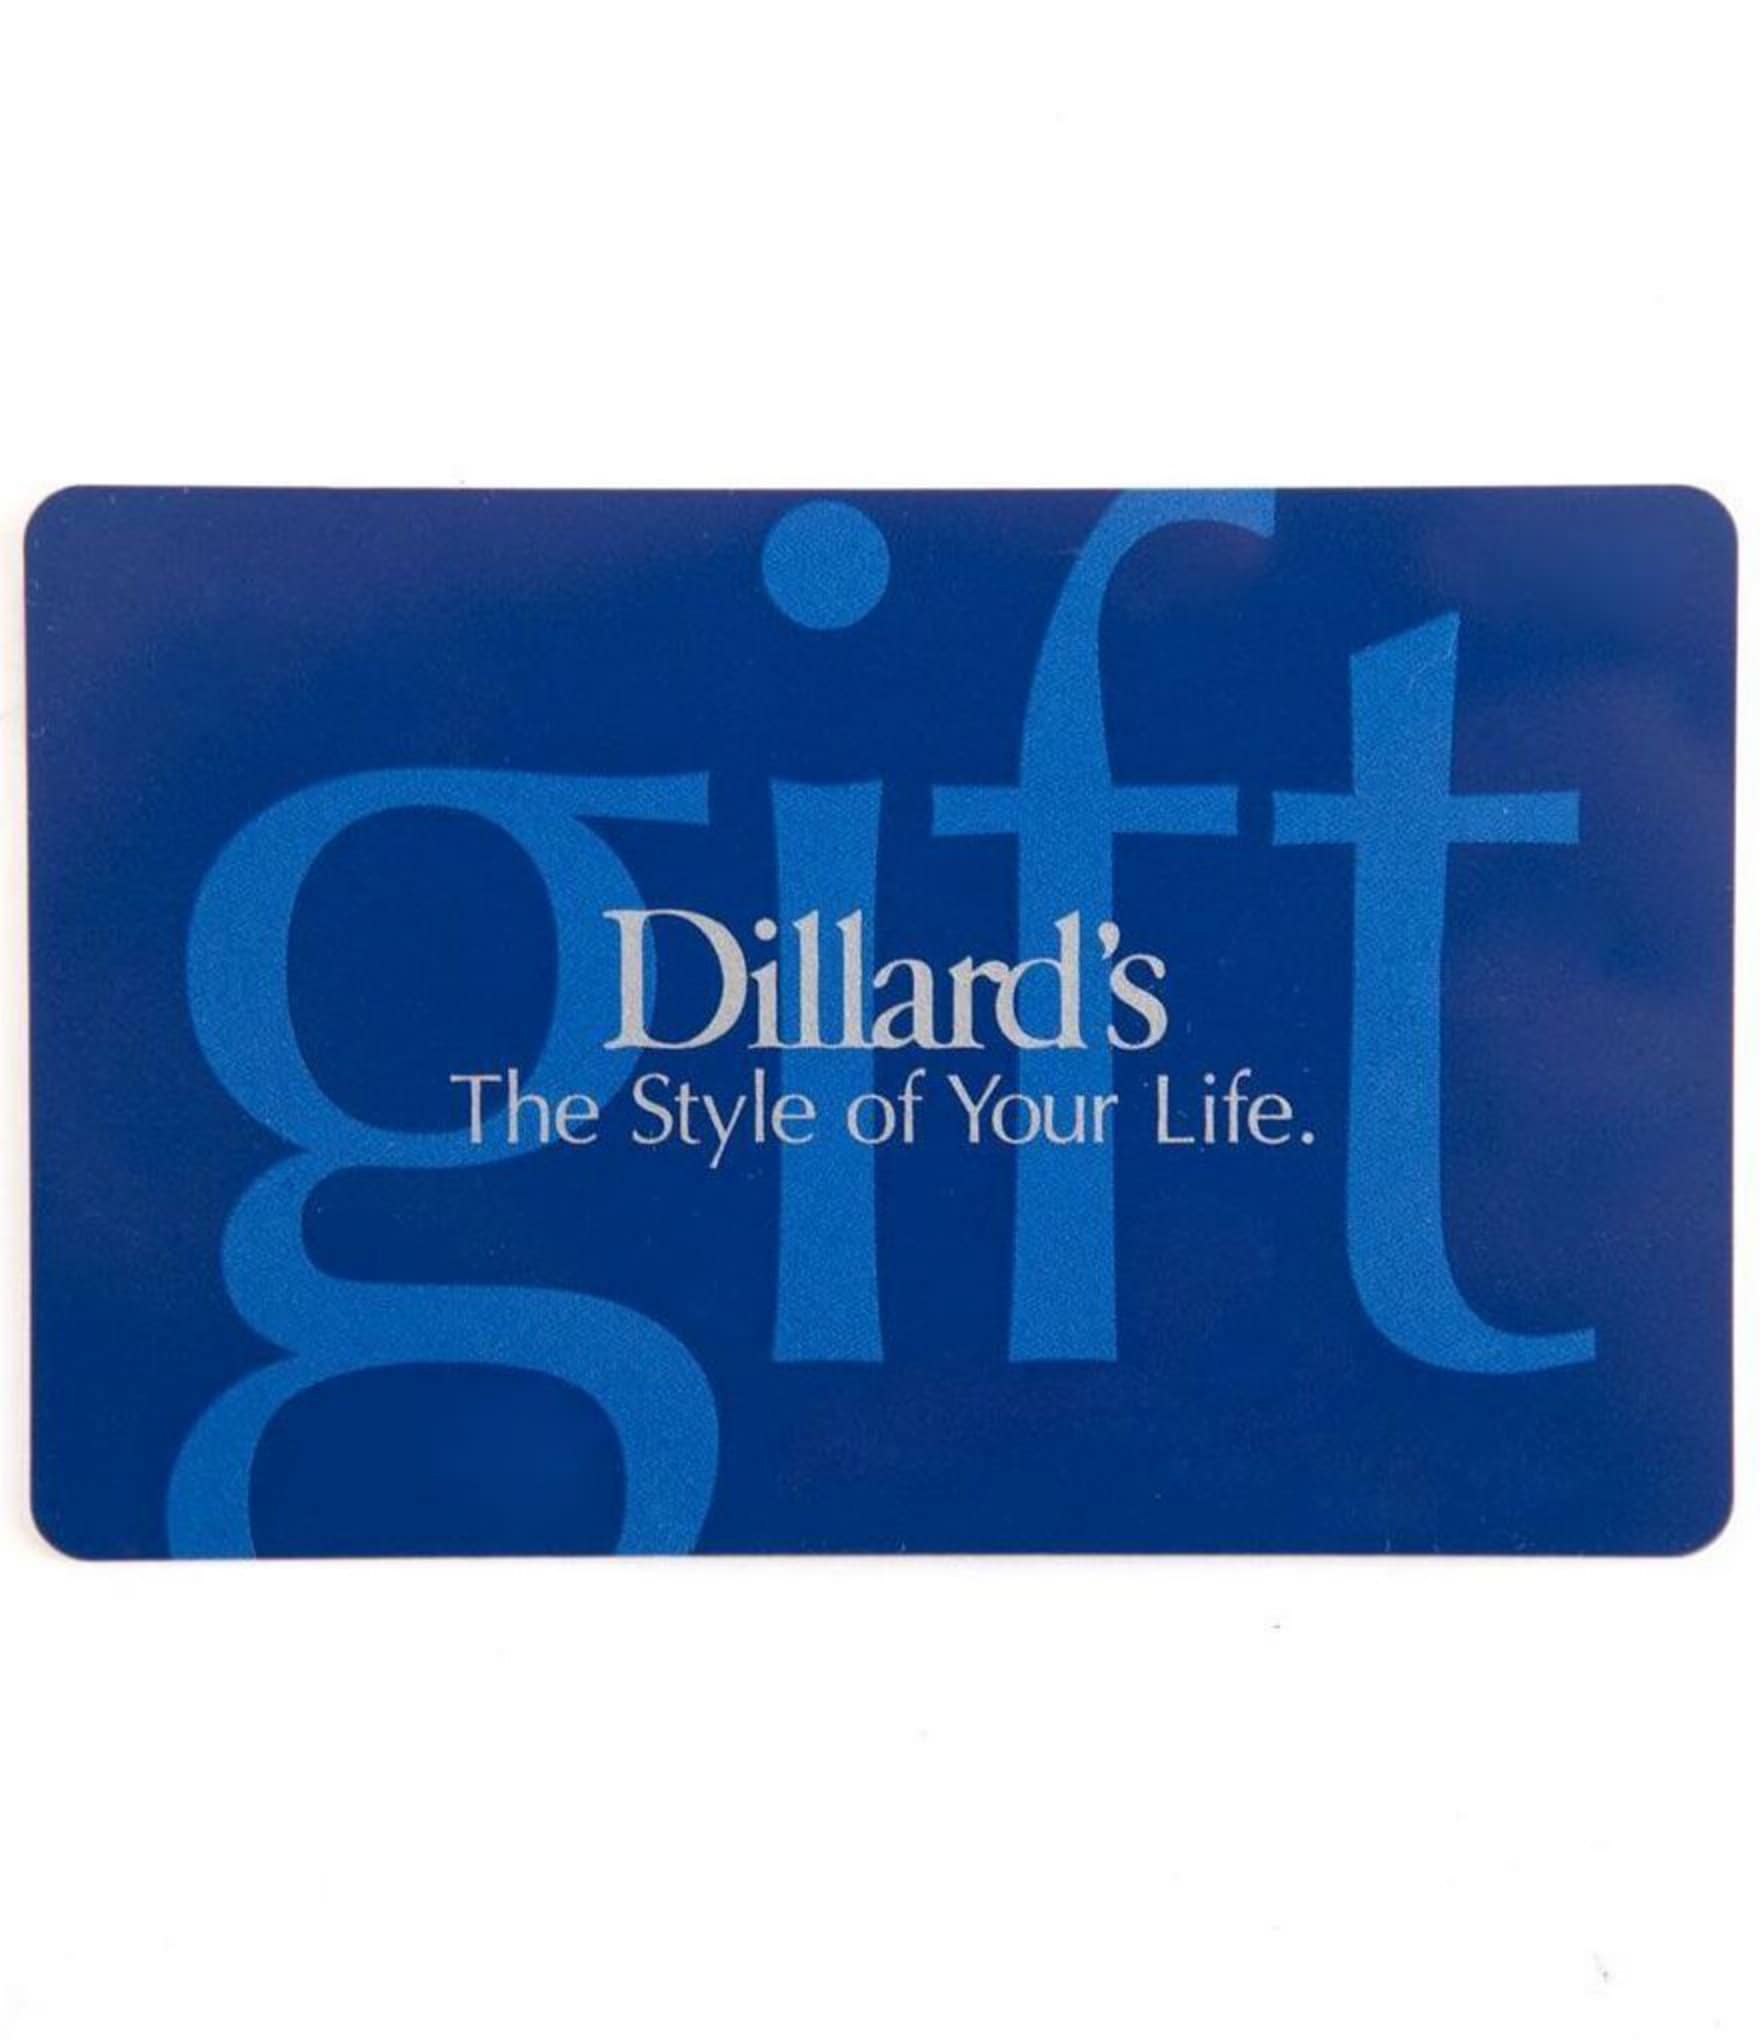 Can I Use a Dillard'S Gift Card Anywhere Else 